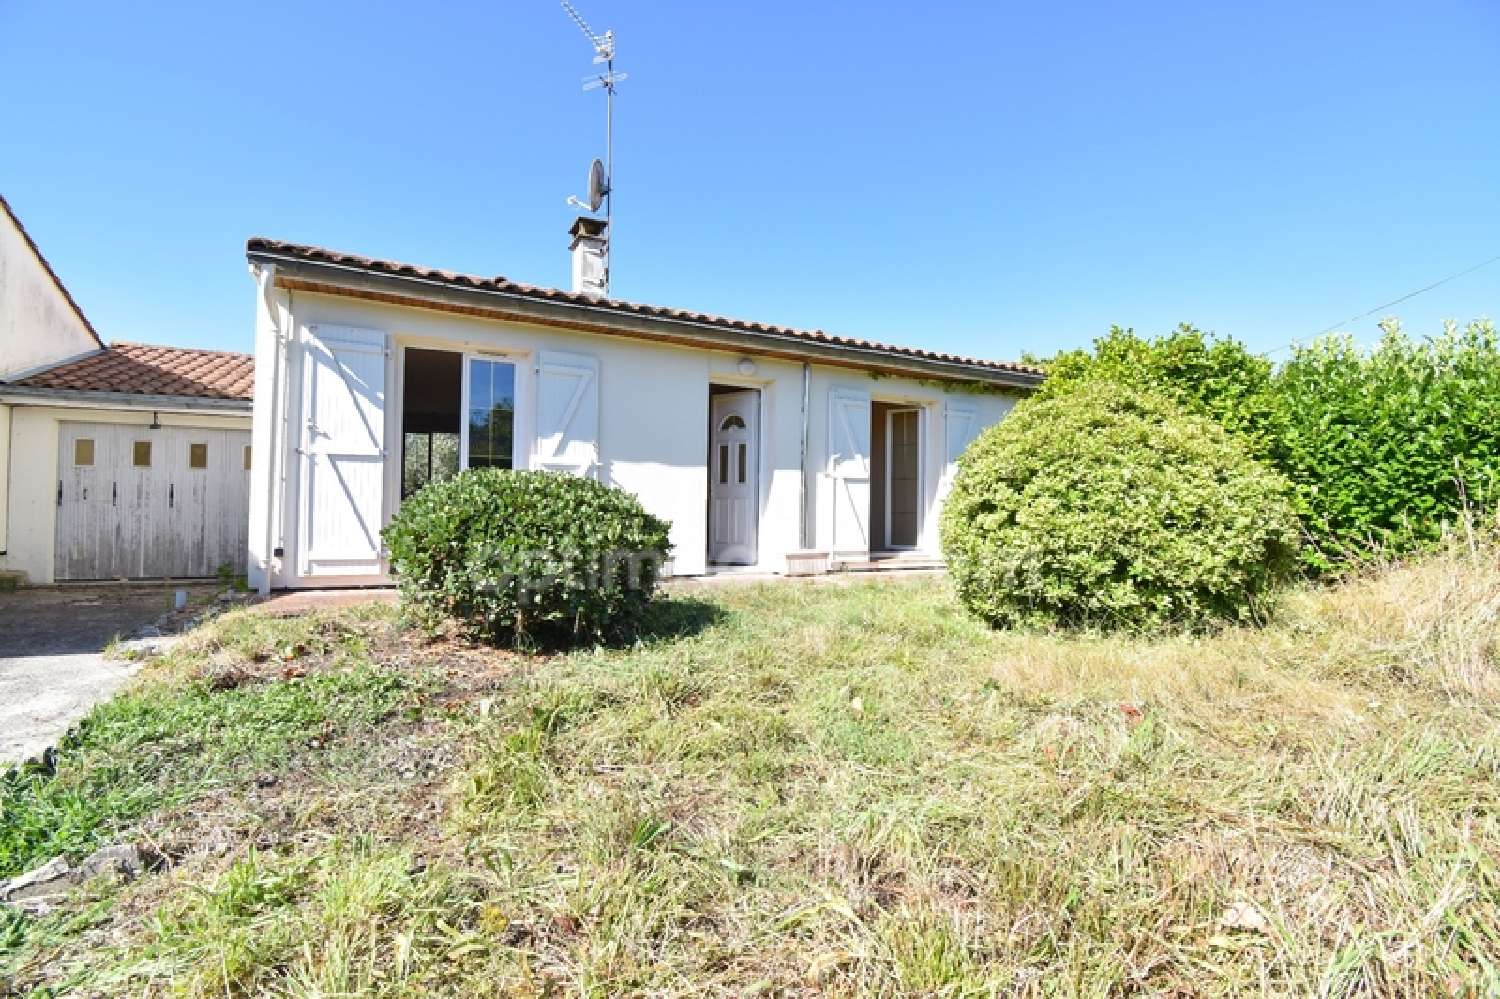  à vendre maison Cestas Gironde 1